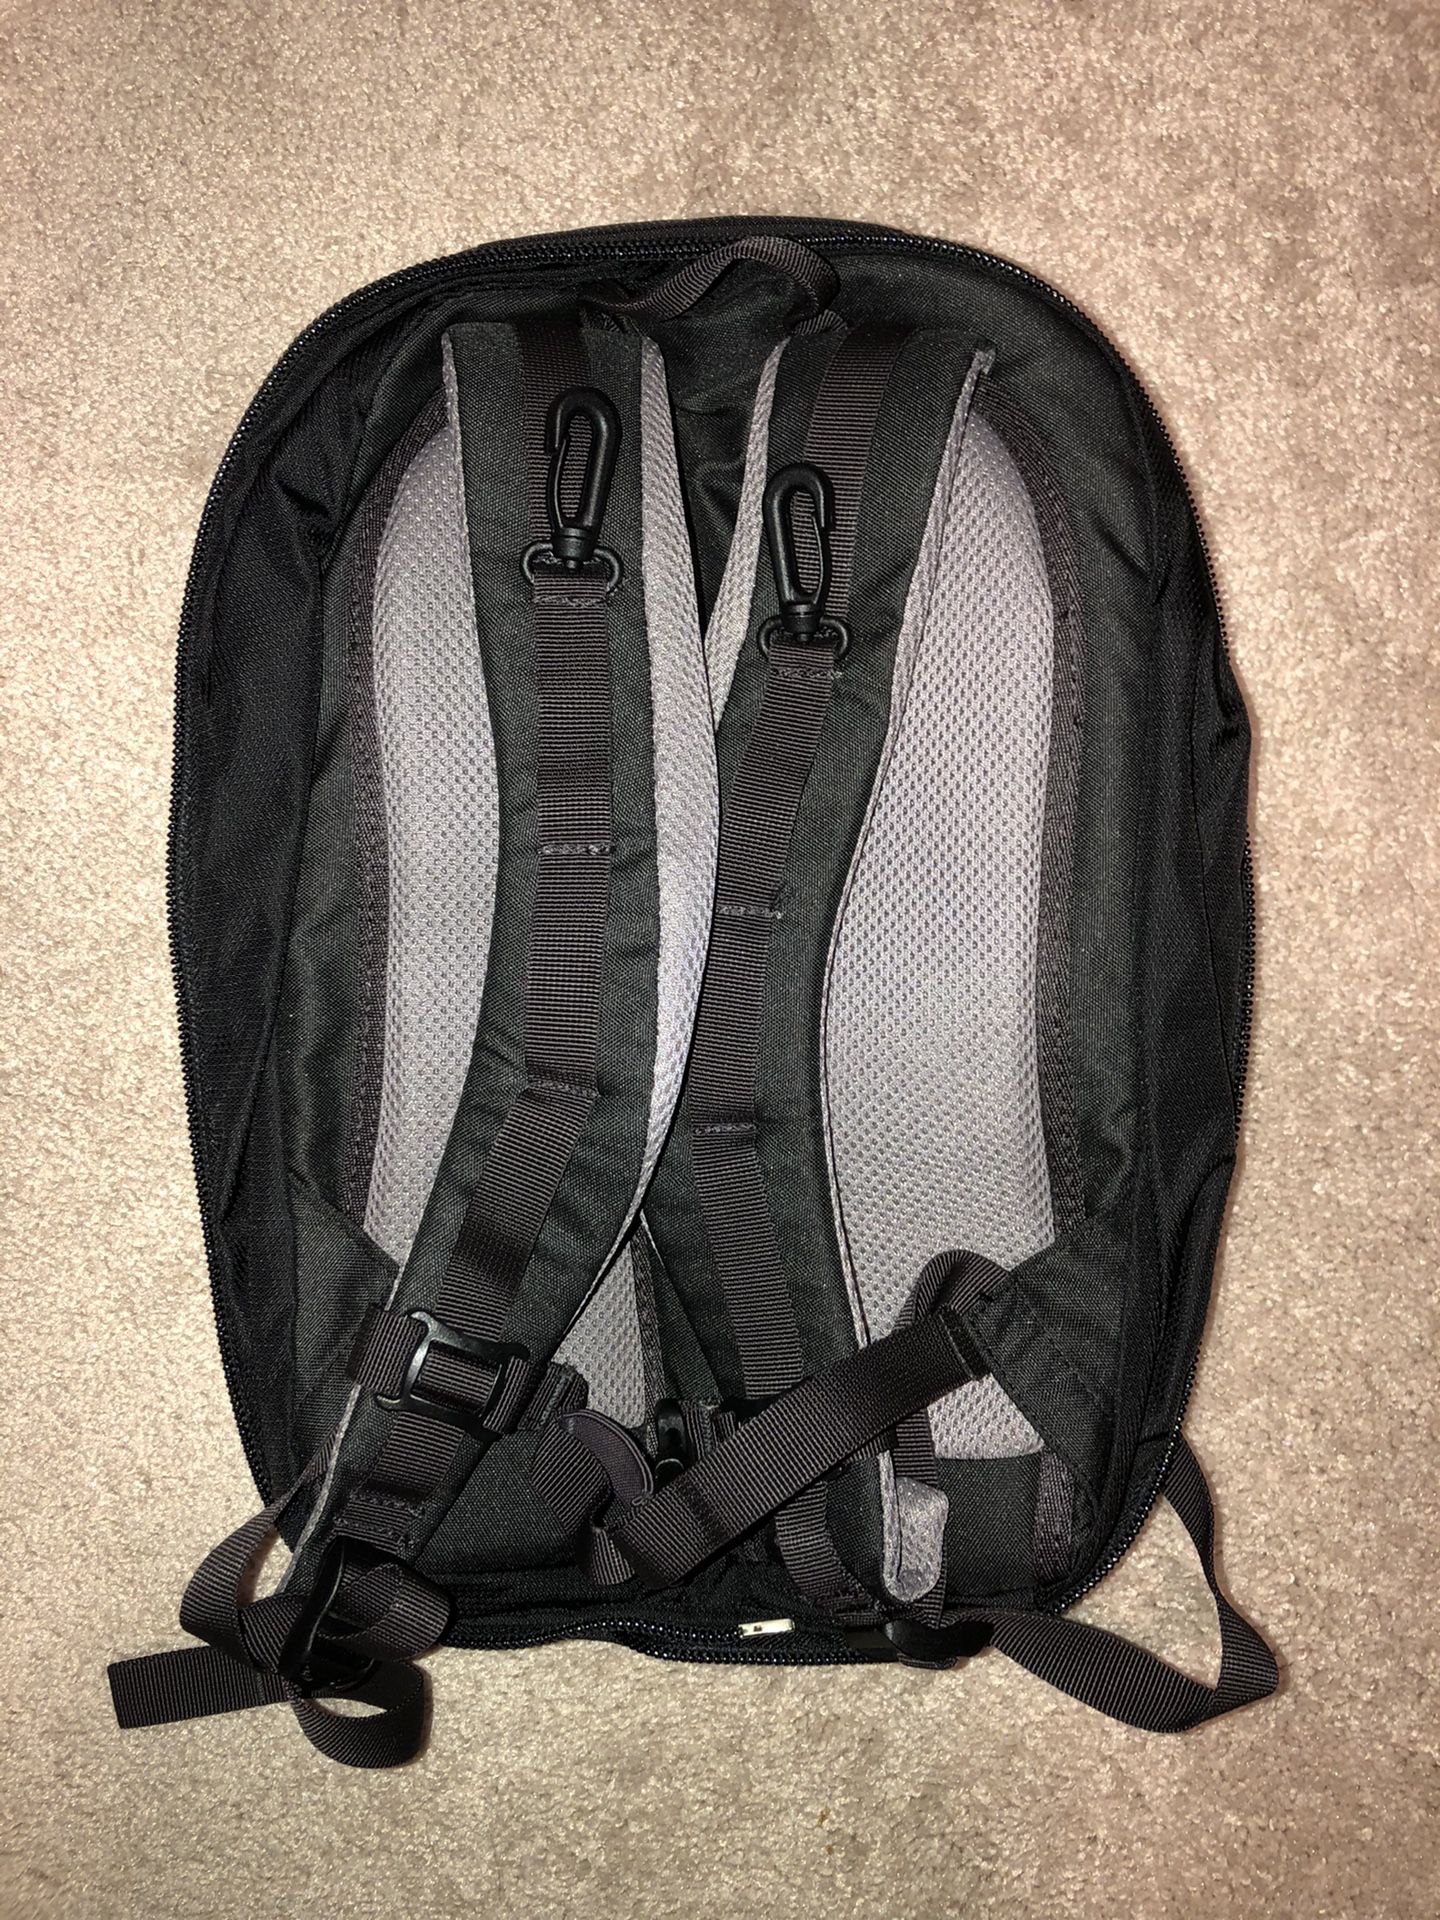 Deuter Traveller 70+10 Travel Backpack